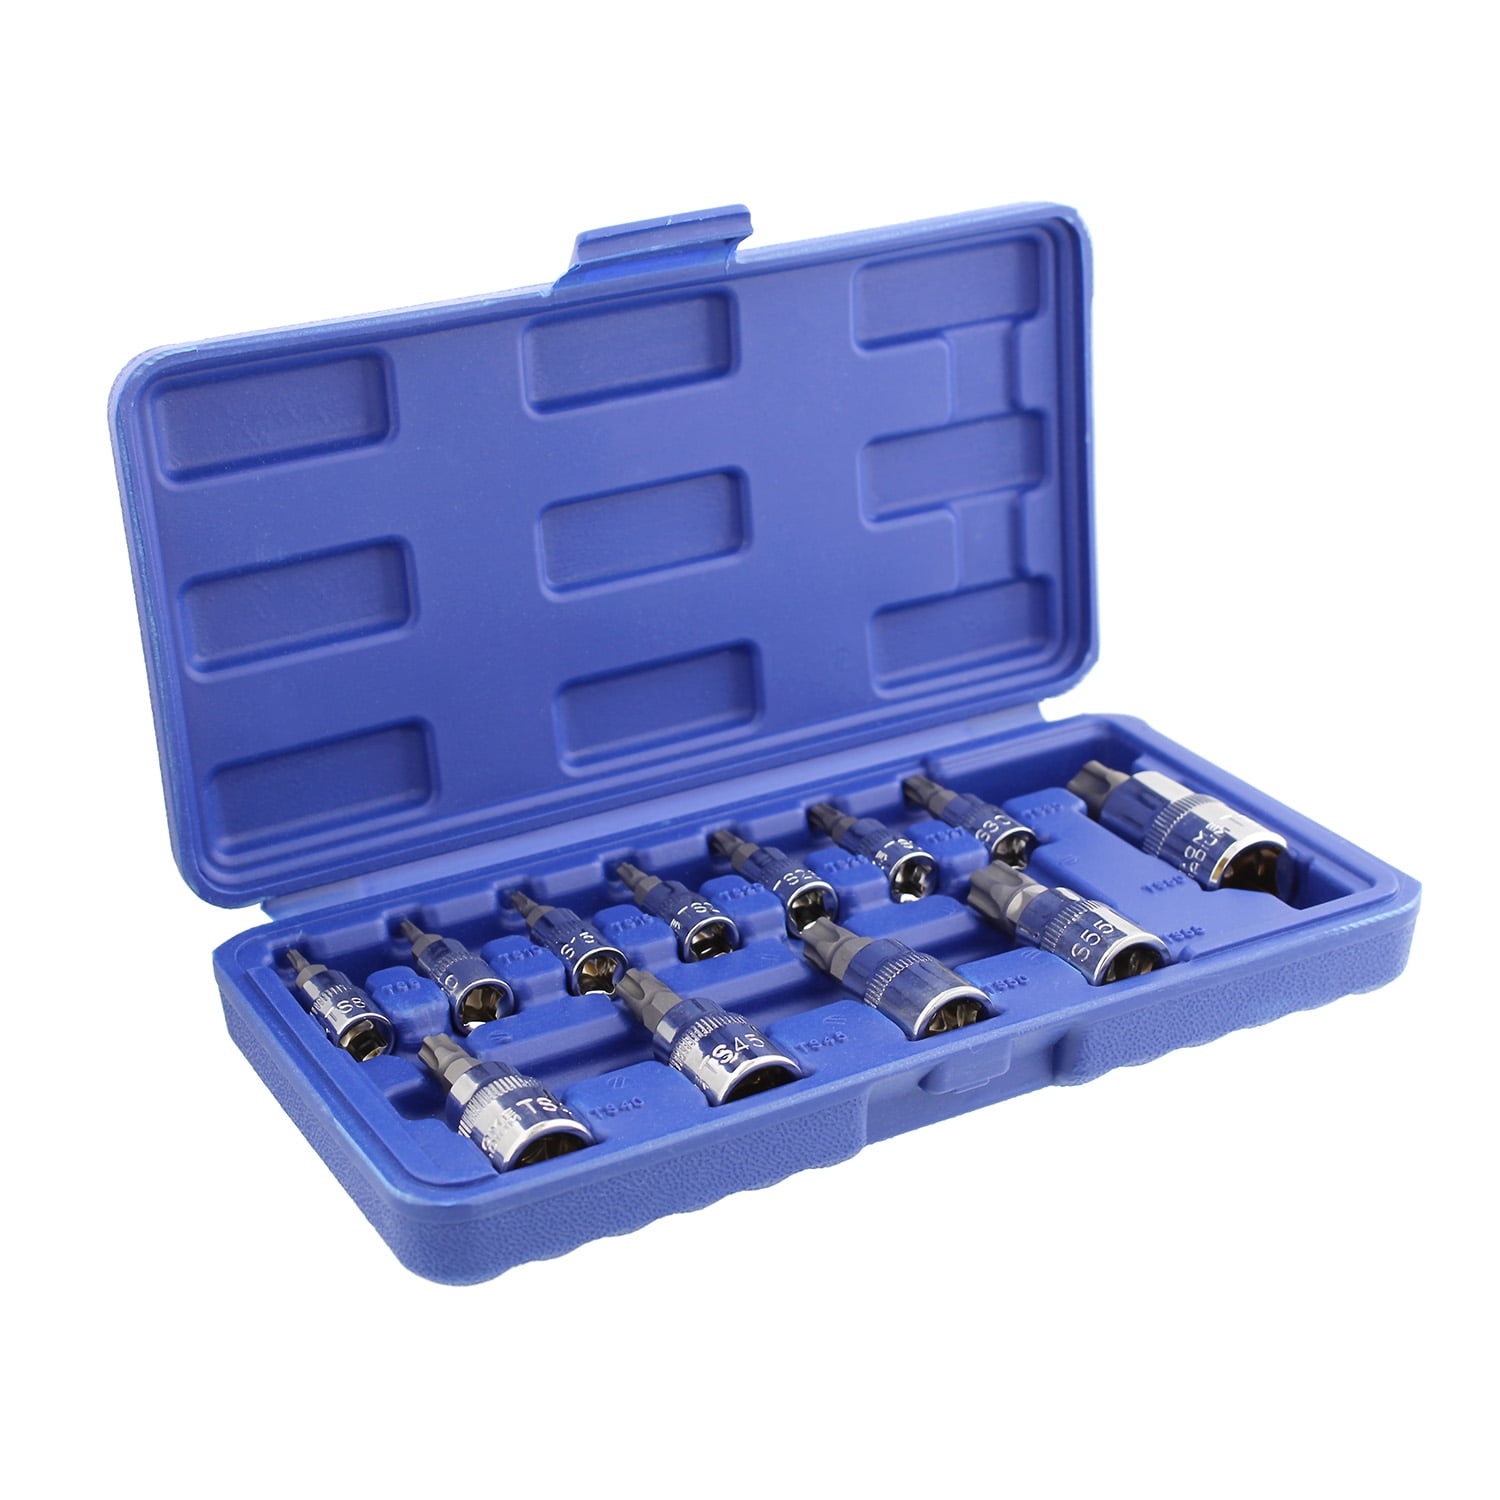 35PC Torque Bit and E-socket Set Tamper Proof Mechanics Tool Star for sale online 